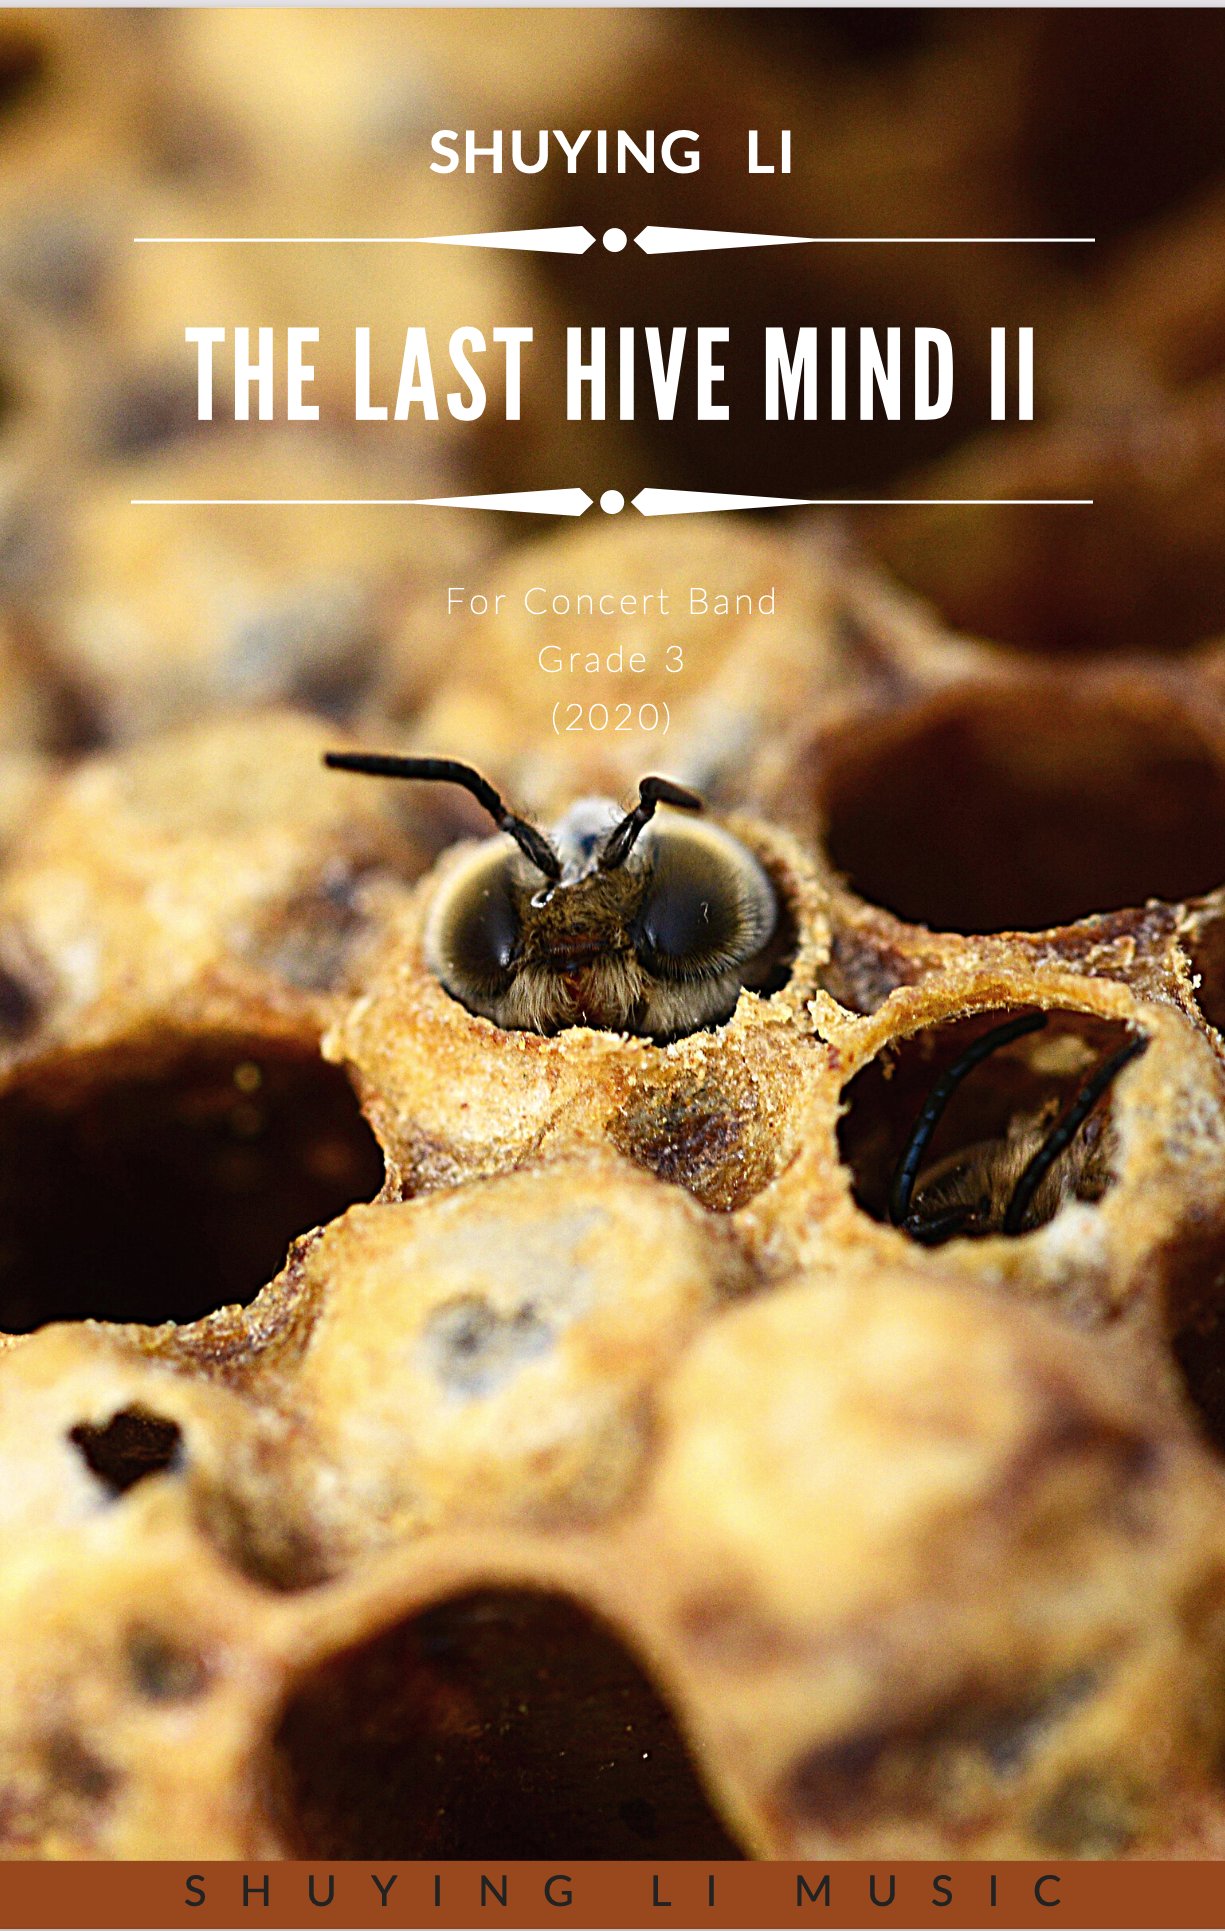 The Last Hivemind II by Shuying Li